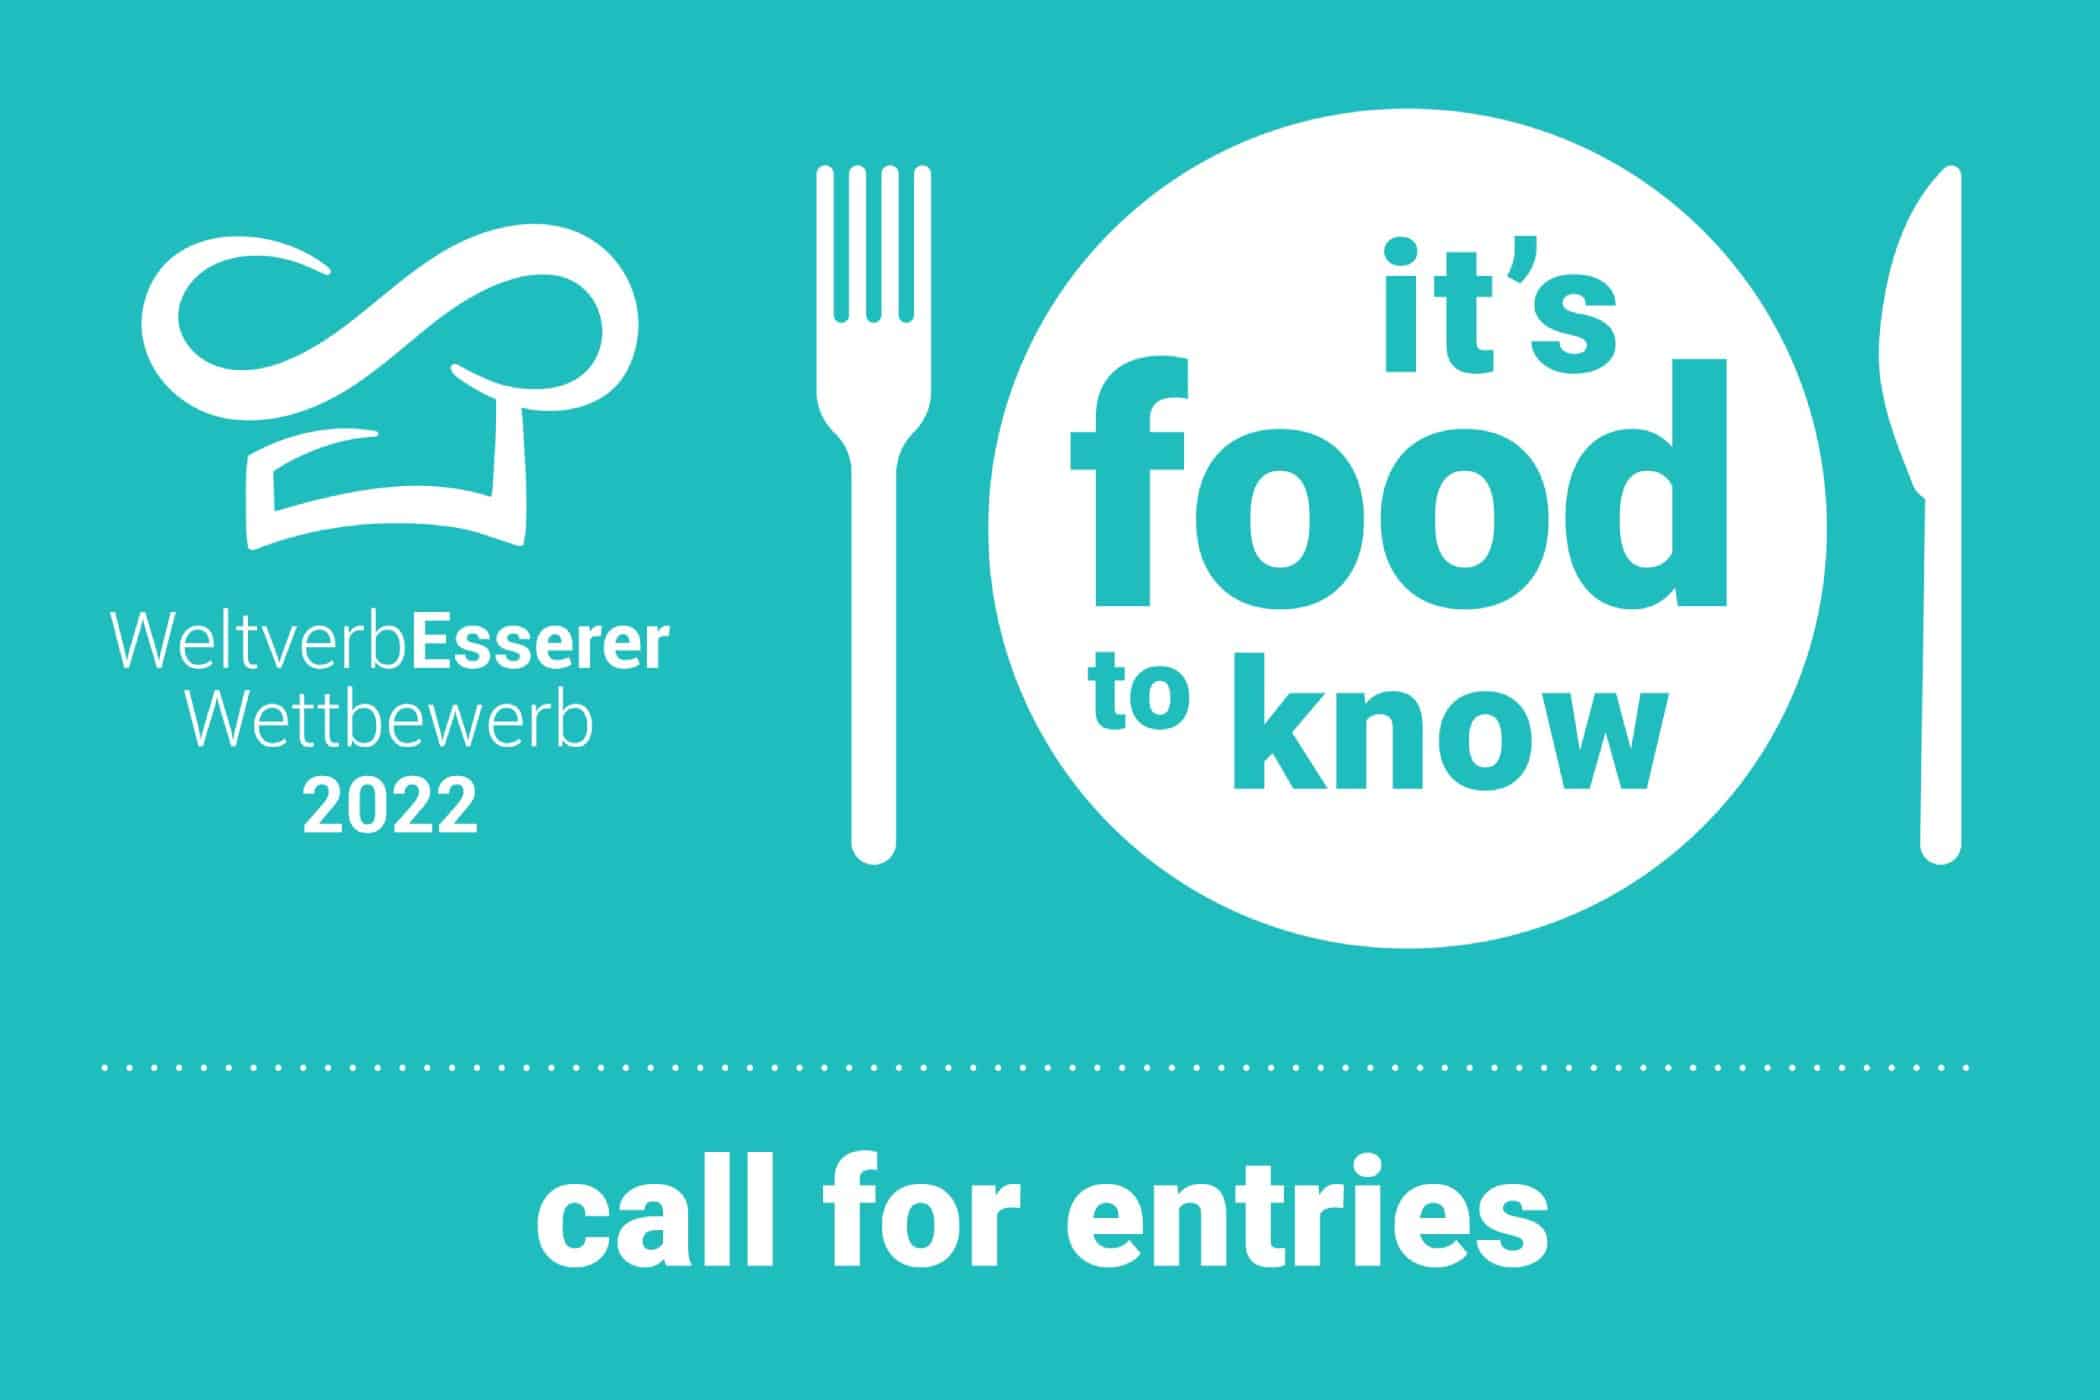 branding cuisine weltverbesserer wettbewerb 2022 keyvisual call for entries - gastronomie, food-nomyblog Mitmachen: WeltverbEsserer-Wettbewerb 2022